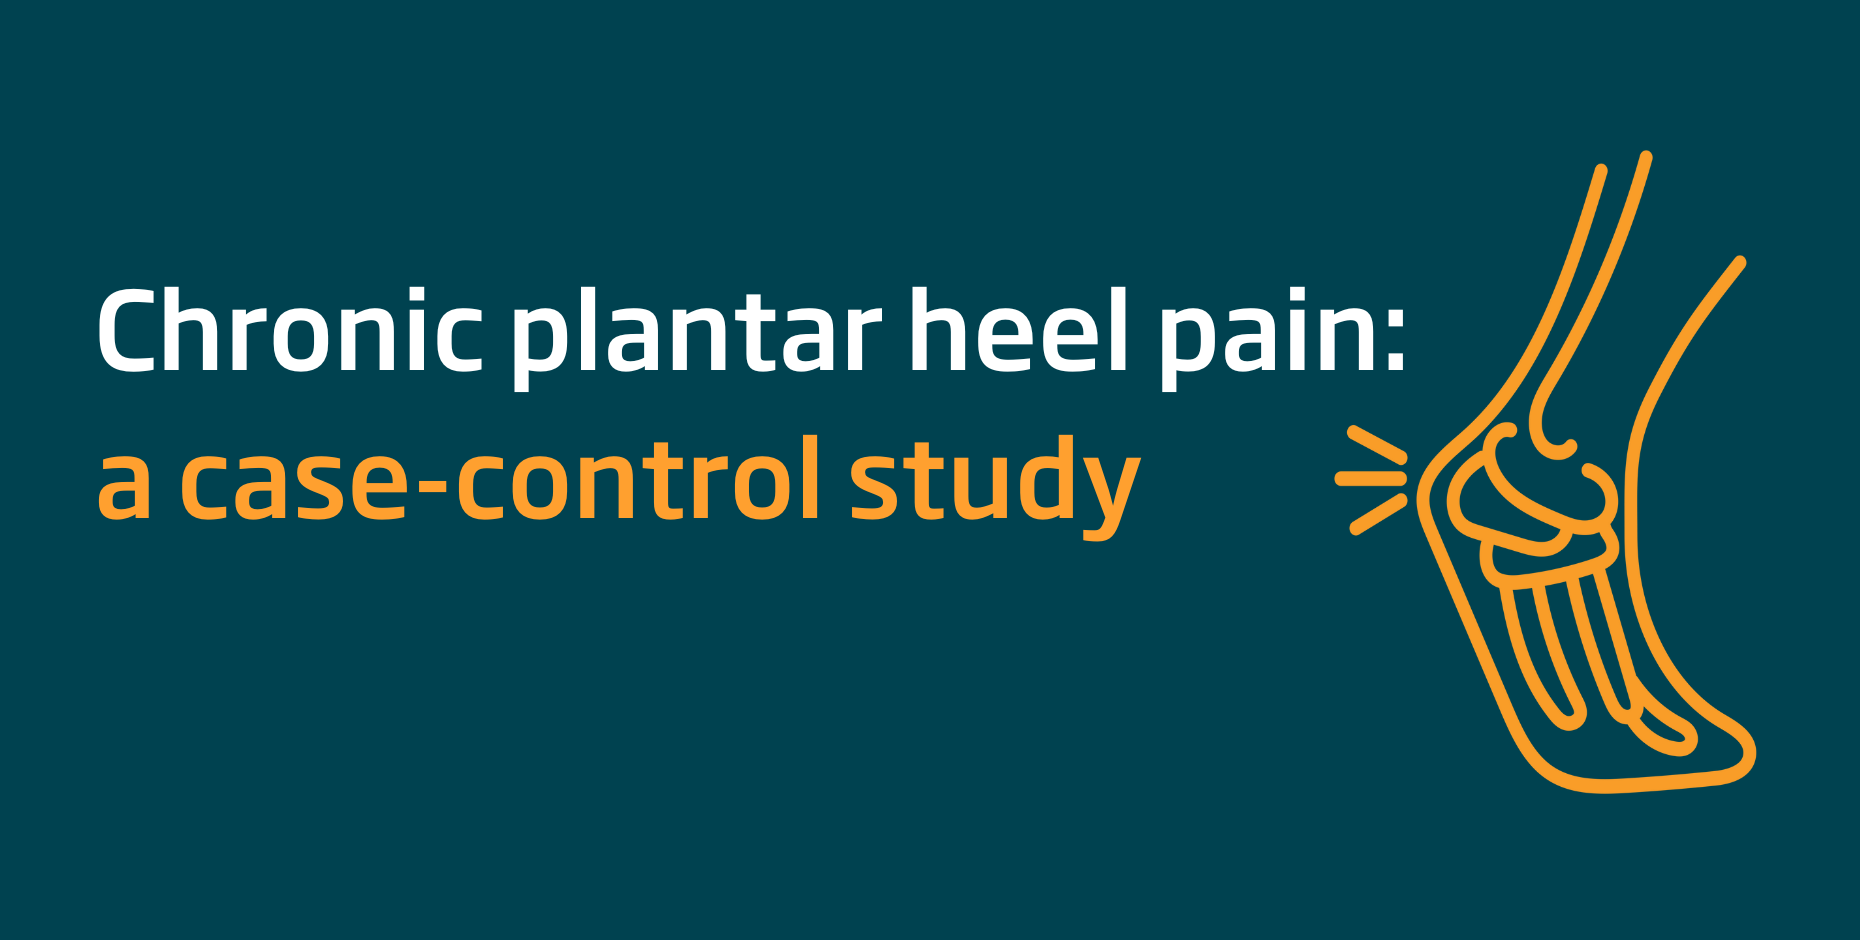 Chronic plantar heel pain: a case-control study